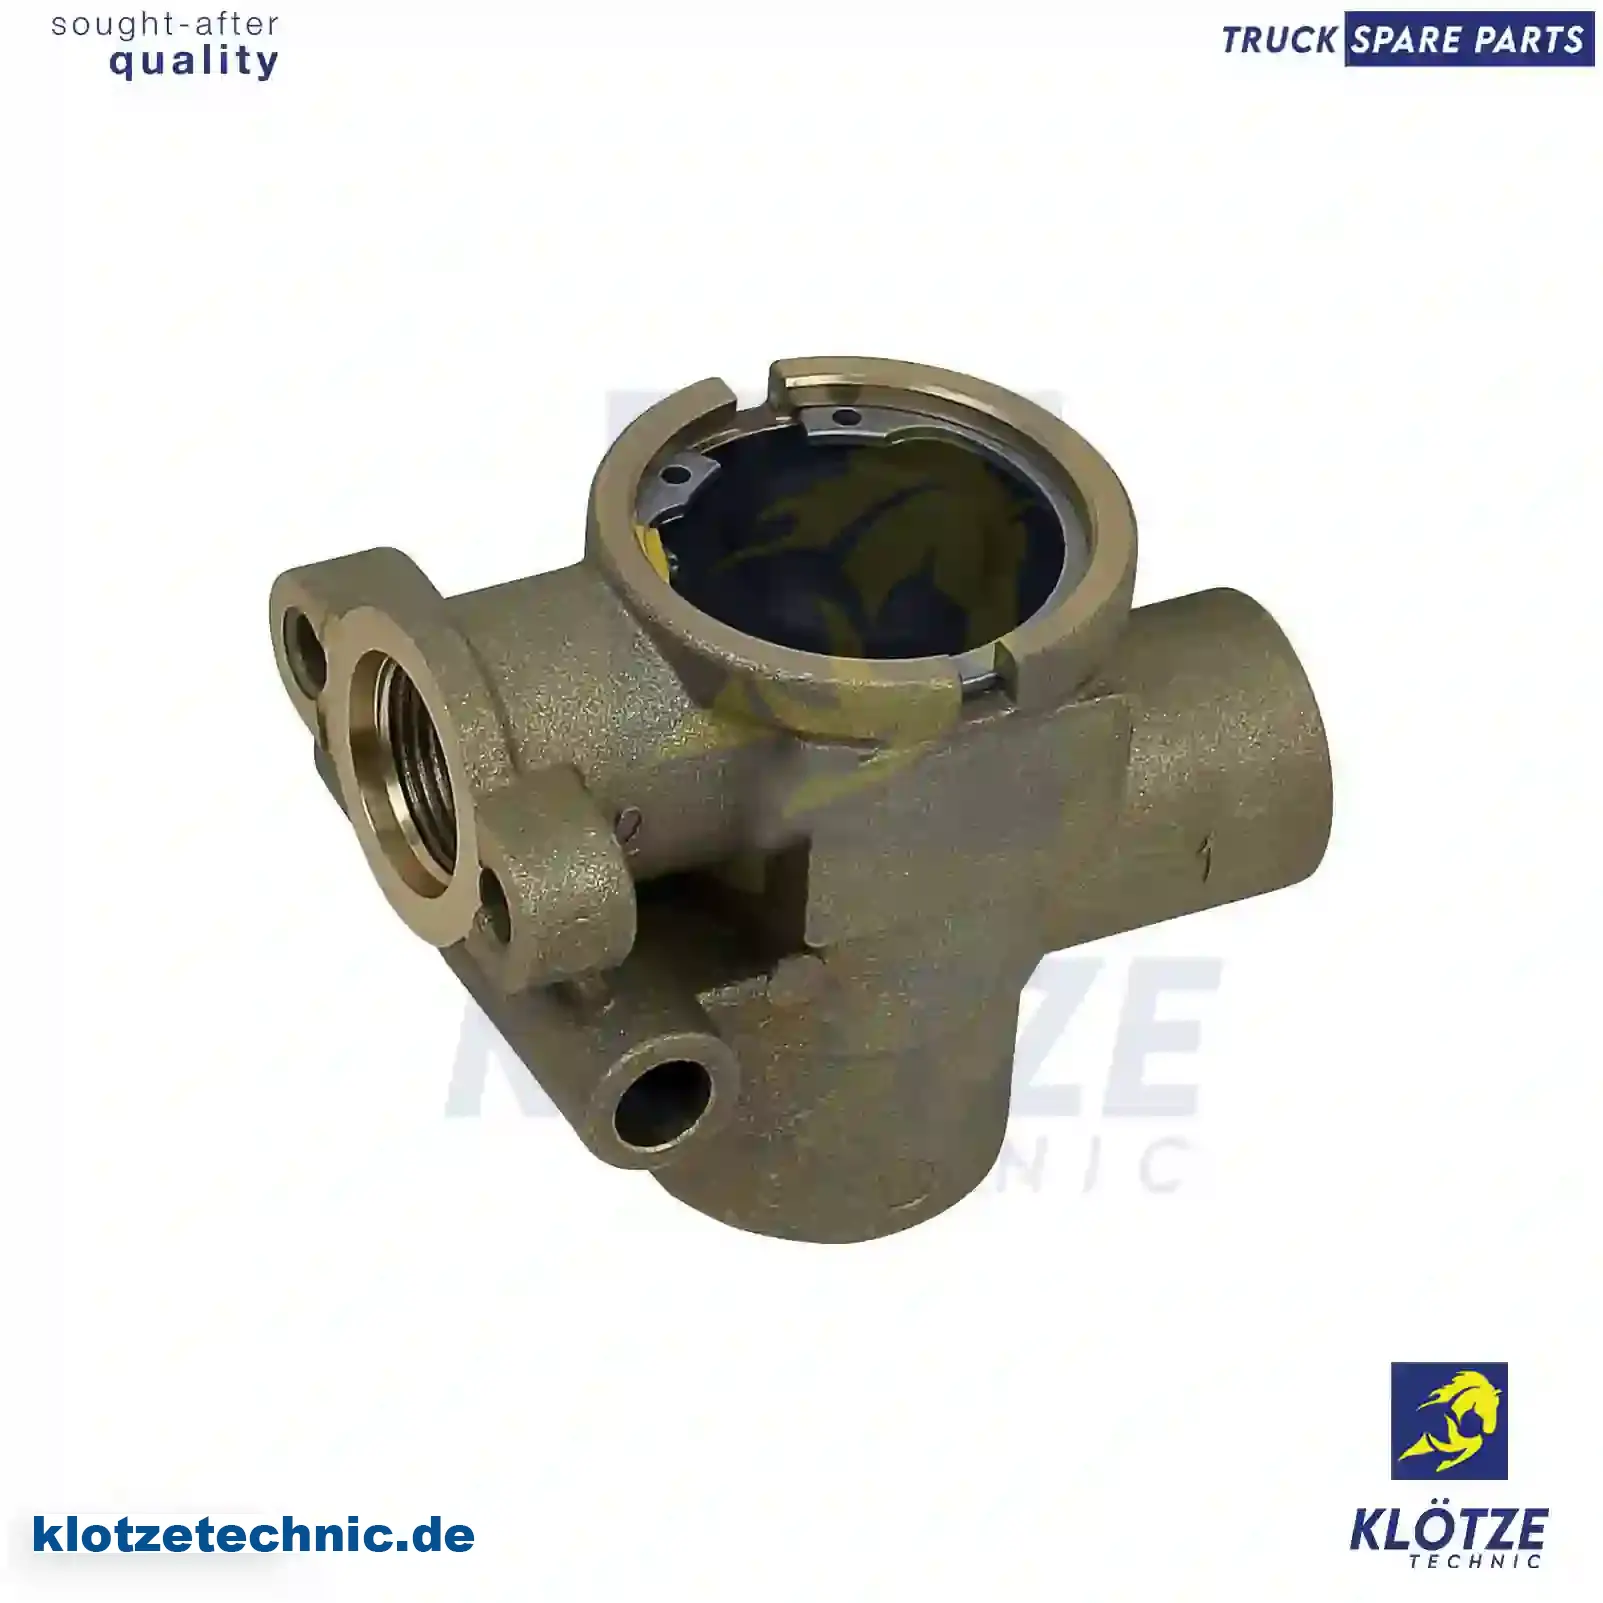 Pressure limiting valve, 5010422329, , || Klötze Technic